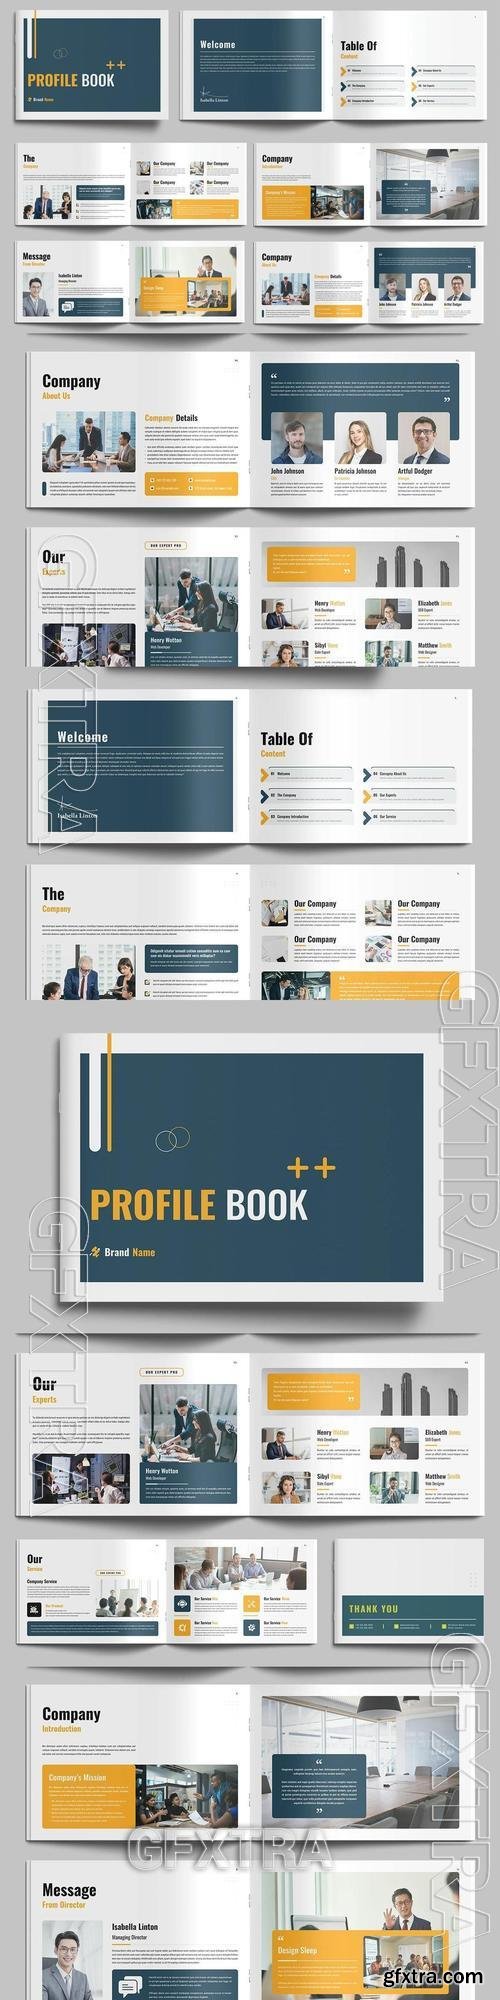 Business Profile Book Design Template 2JKD7W7